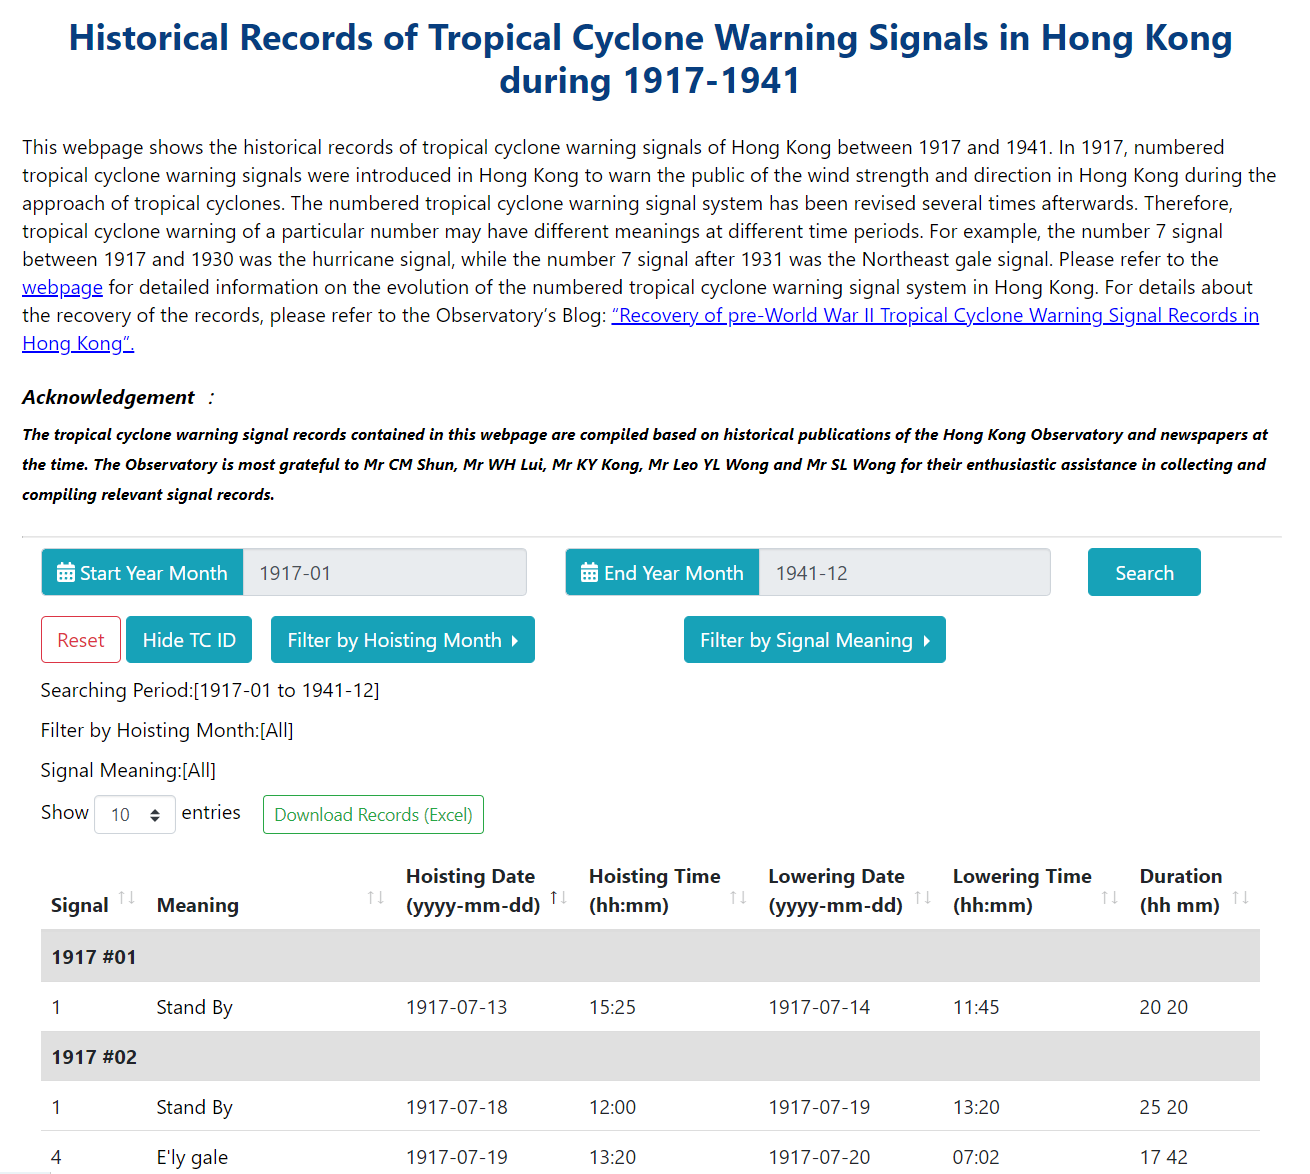 “Historical Records of Tropical Cyclone Warning Signals in Hong Kong during 1917-1941” Webpage